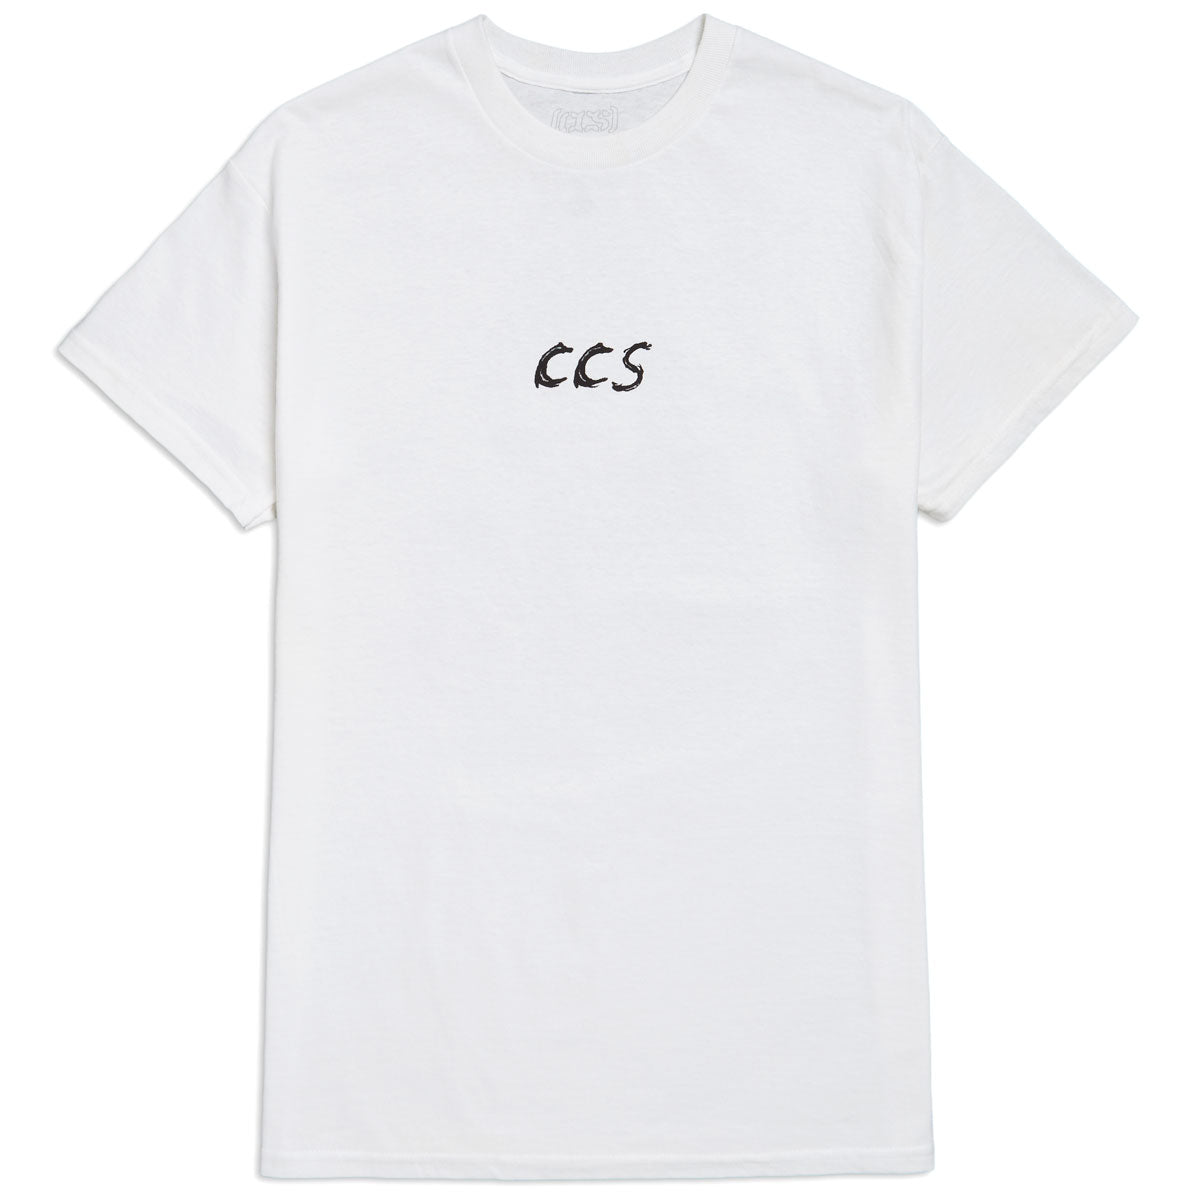 CCS Smile on the Surface T-Shirt - White/Black image 3